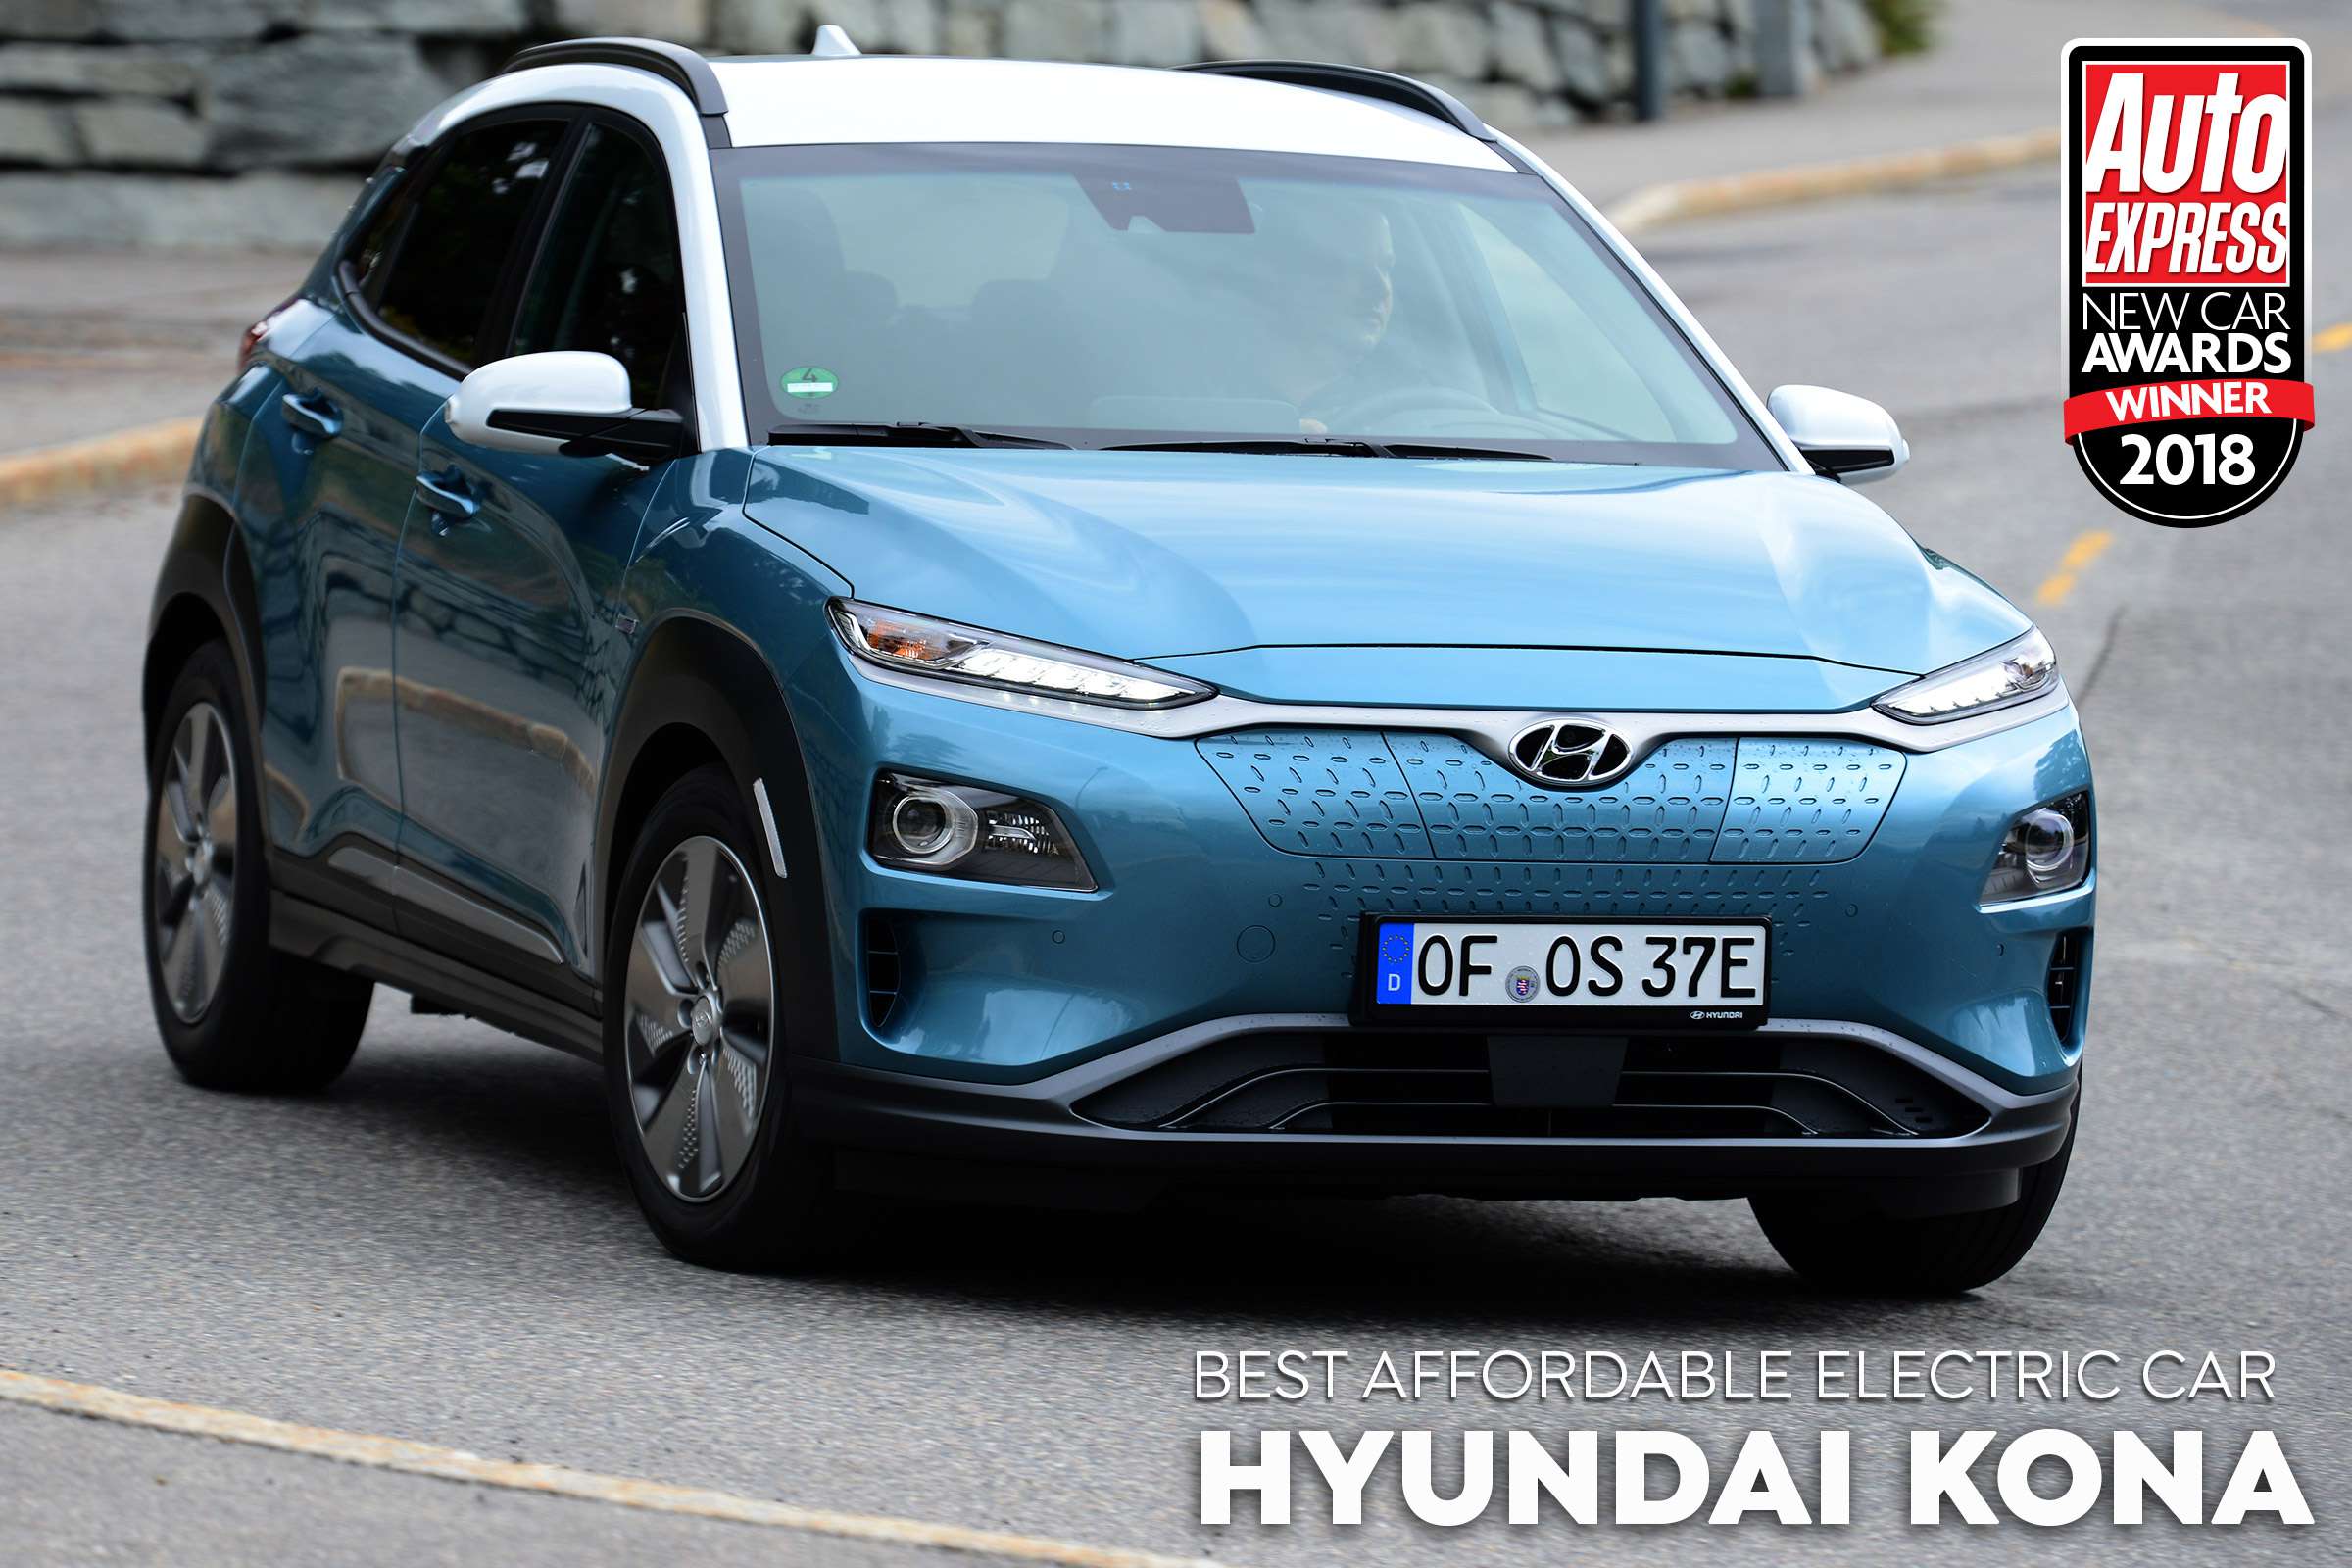 Taboola Ad Example 62189 - Affordable Electric Car Of The Year 2018: Hyundai Kona Electric